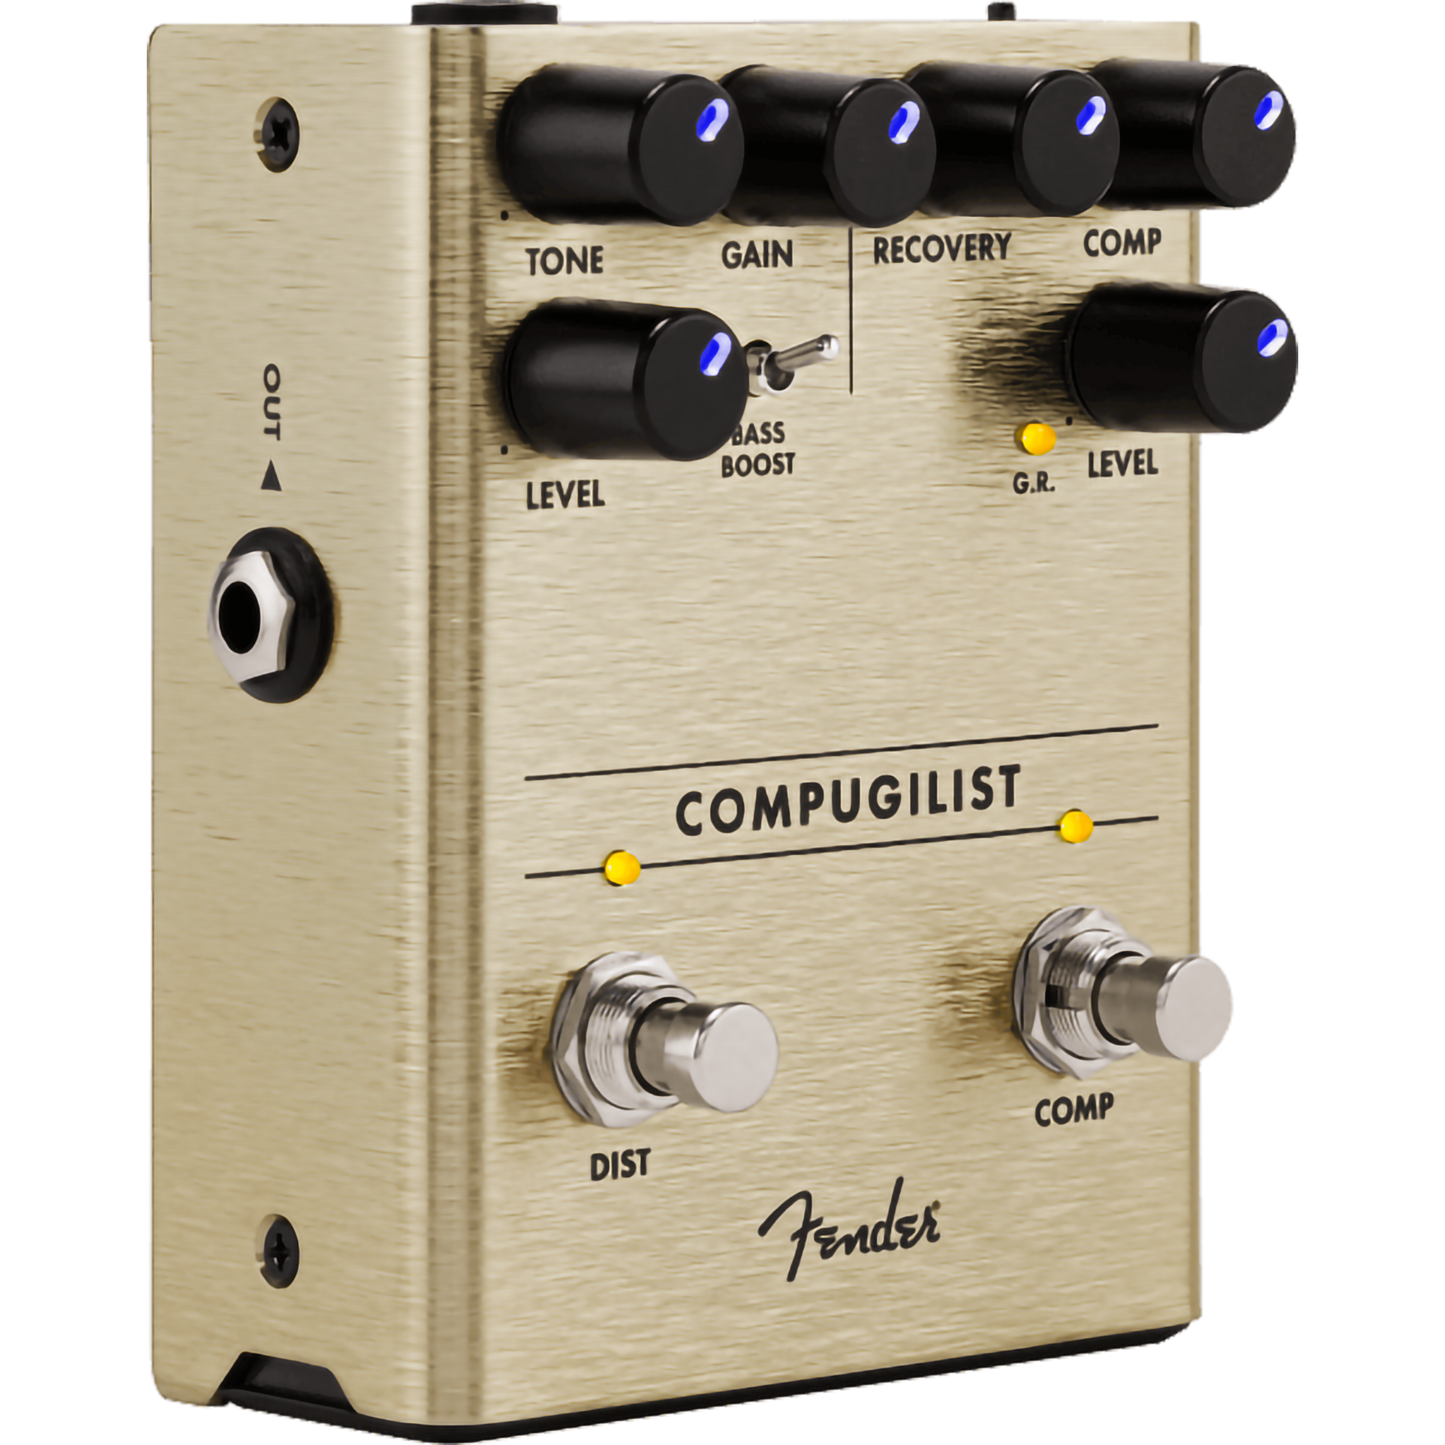 Fender Compugilist Comp/Distortion Pedal